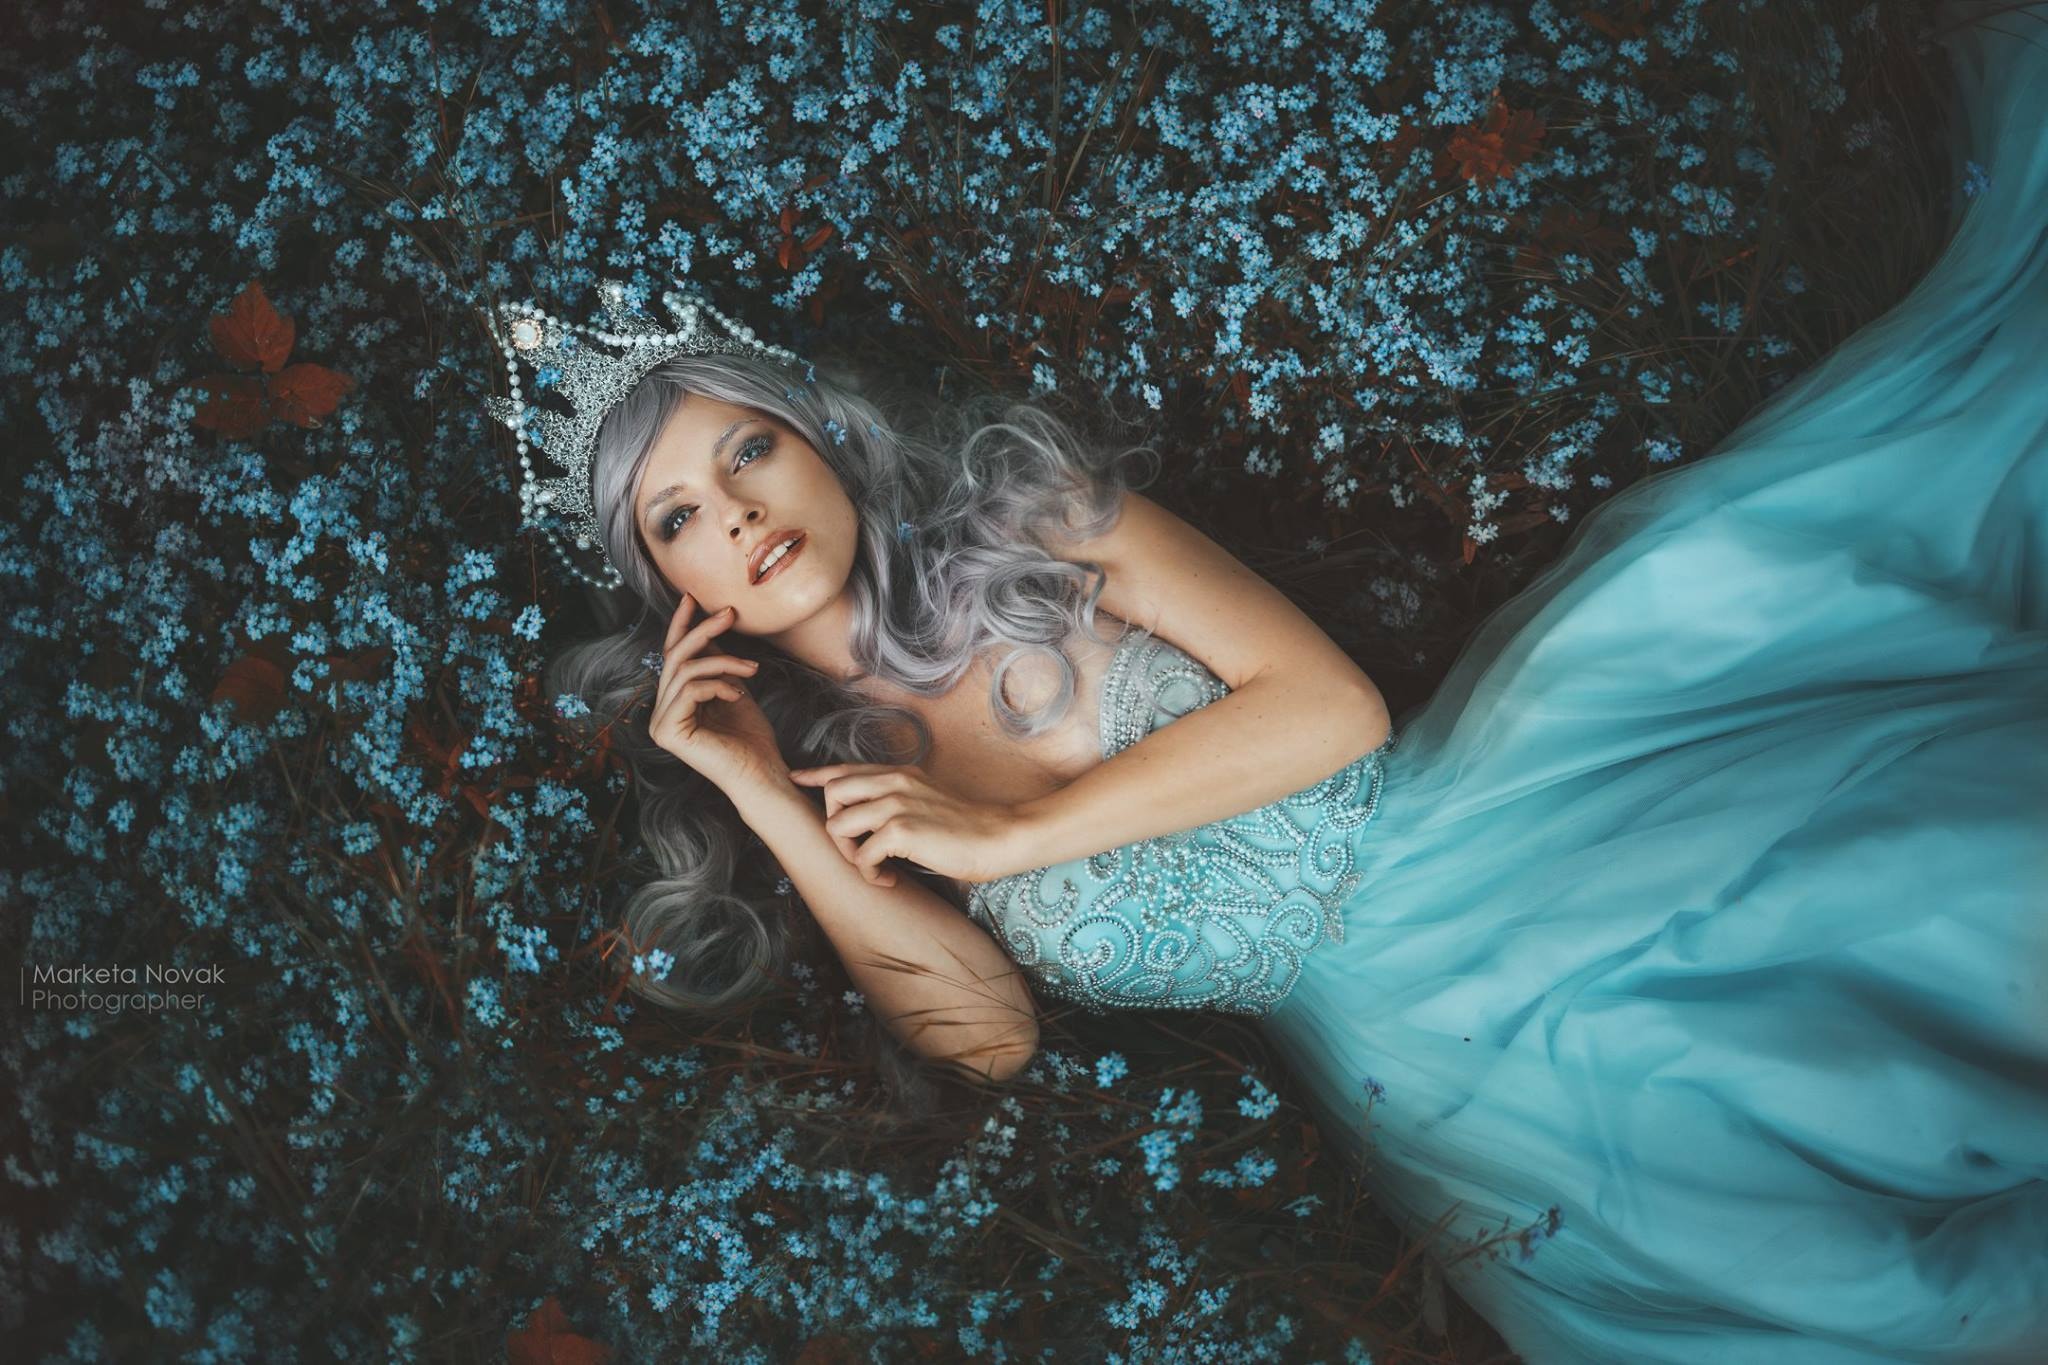 People 2048x1365 Marketa Novak fantasy girl crown blue dress women model 500px